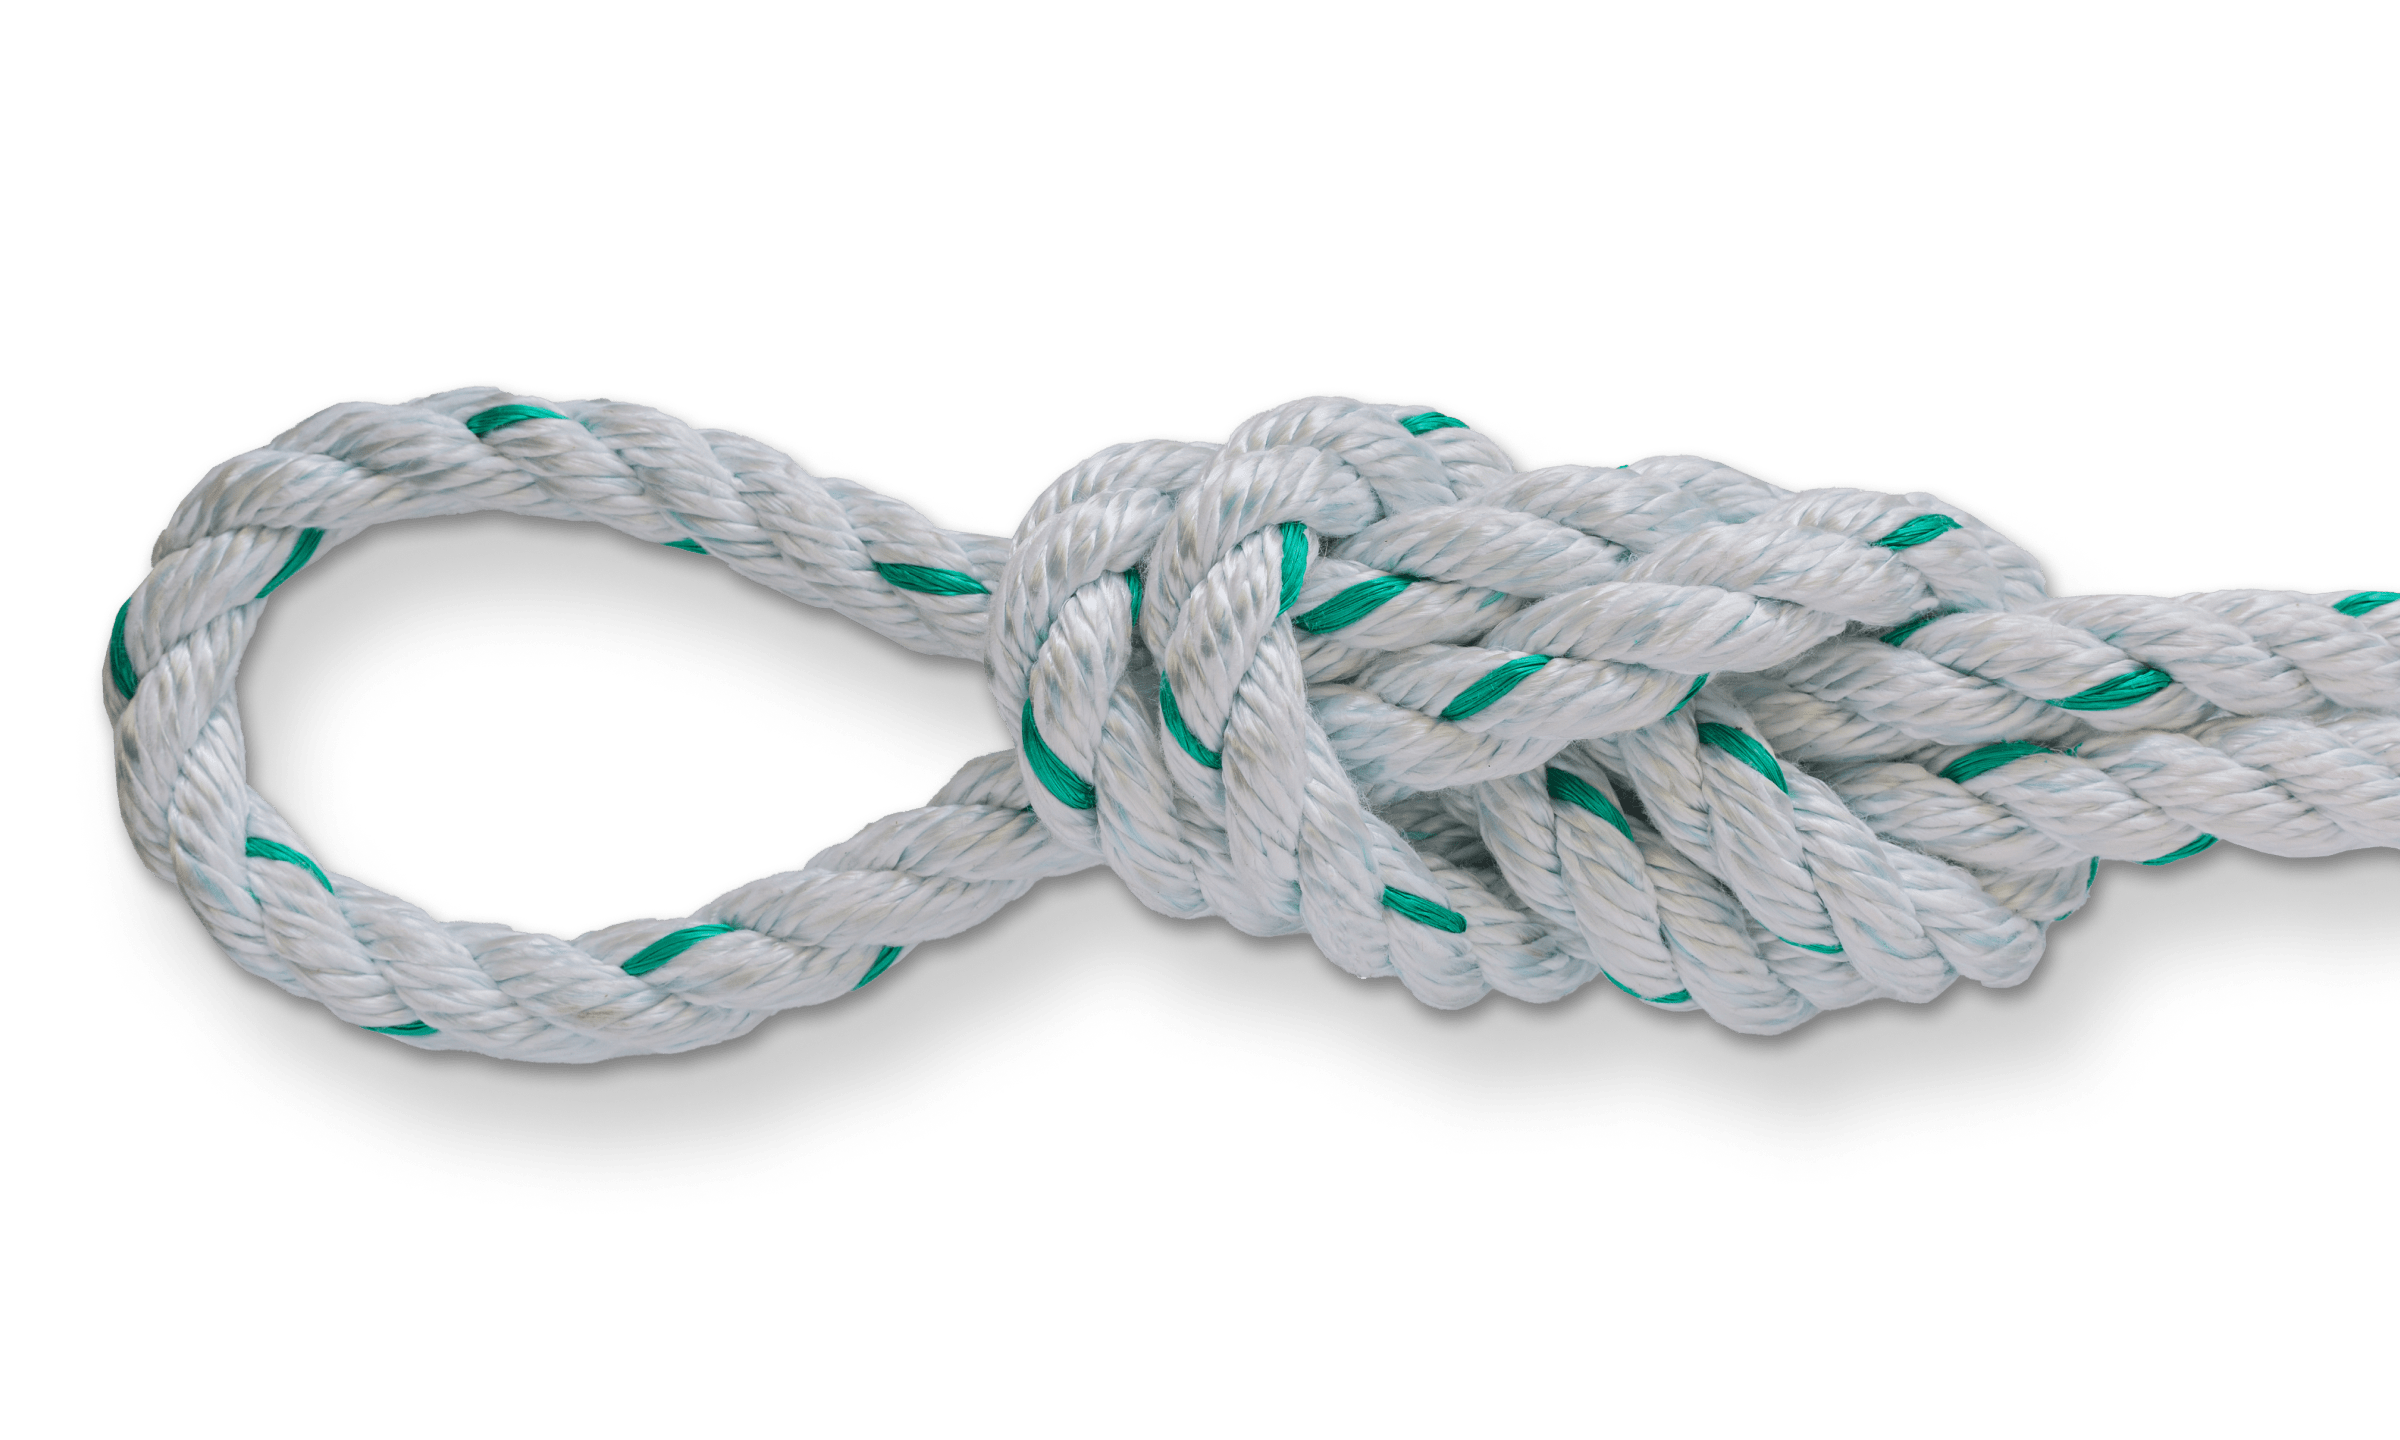 samson pro master rigging rope